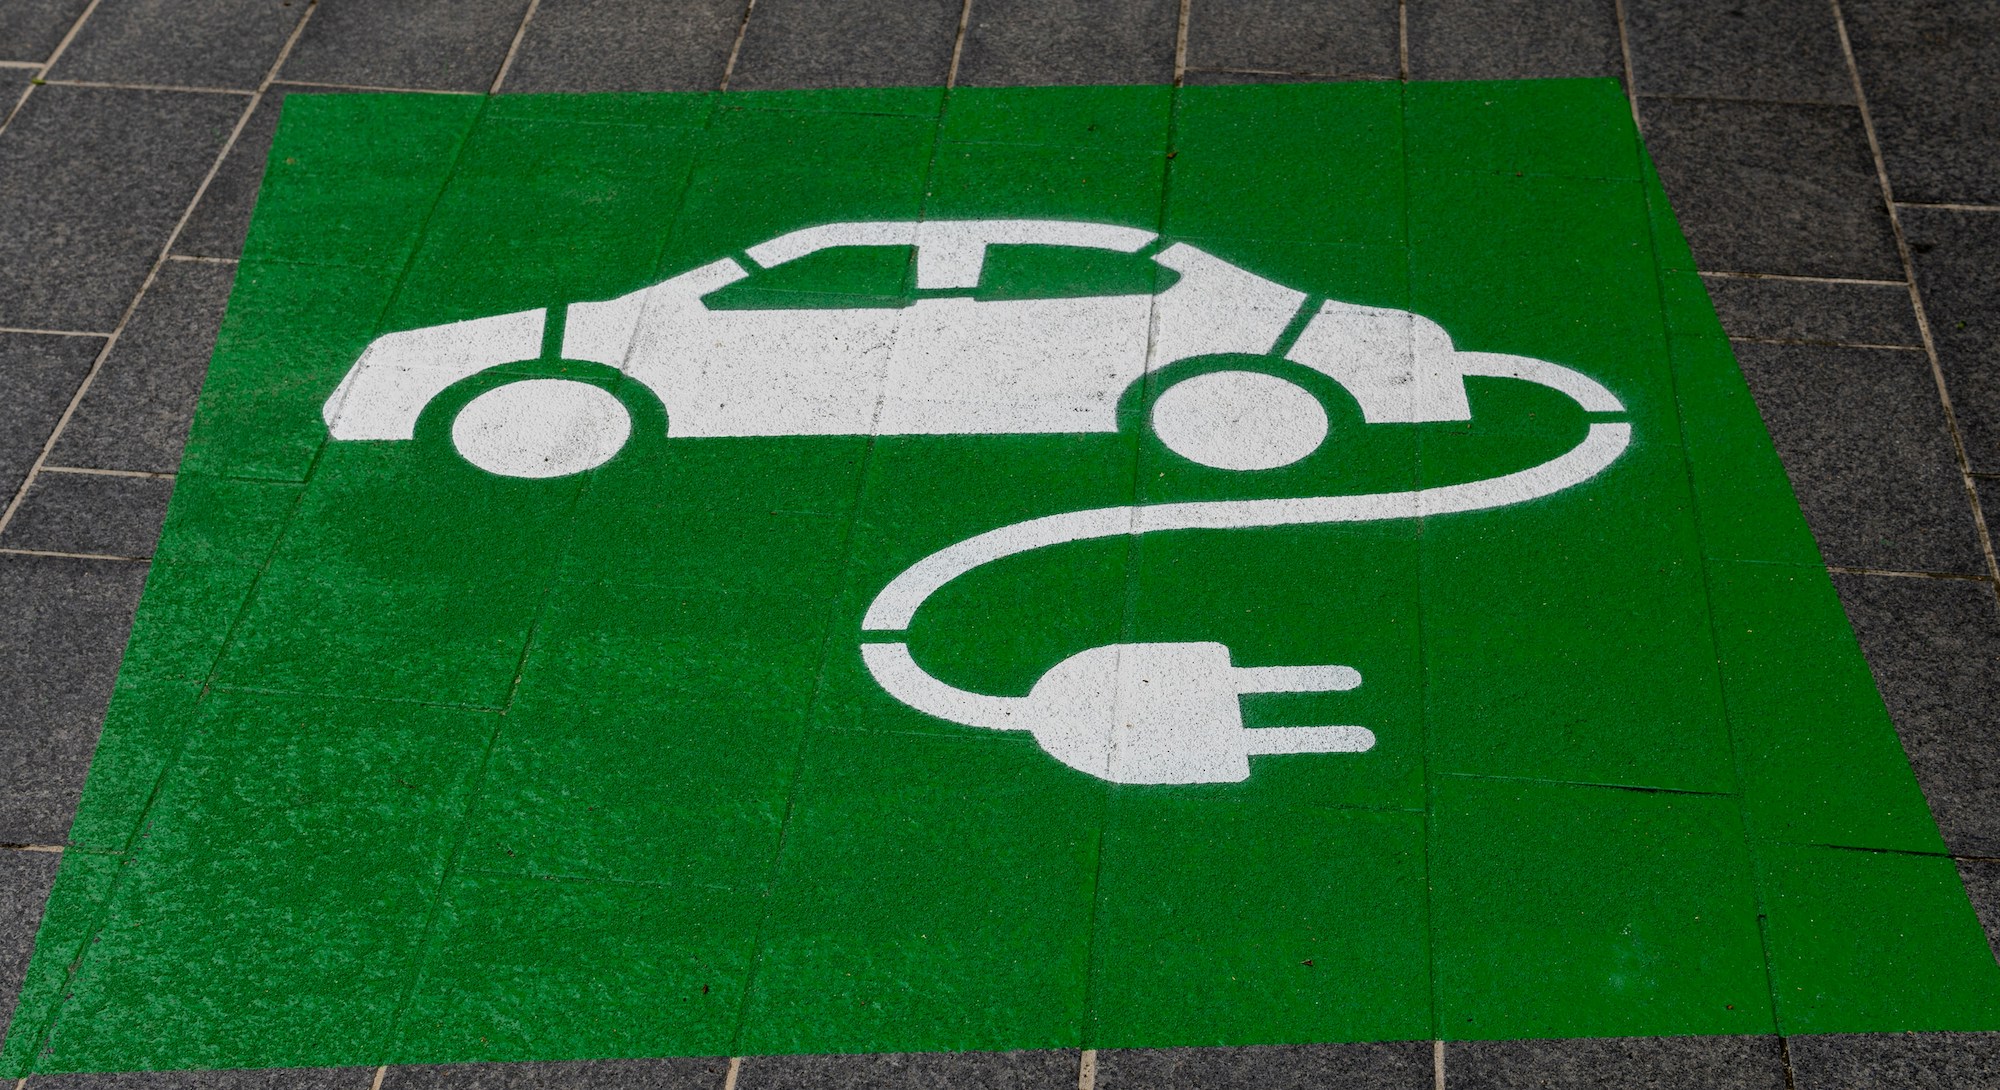 Wonderinterest | Βιώσιμα ηλεκτρικά αυτοκίνητα; Αποκλείεται. Υπάρχει έλλειψη μηχανικών και τα οχήματα καταλήγουν σε μάντρες.